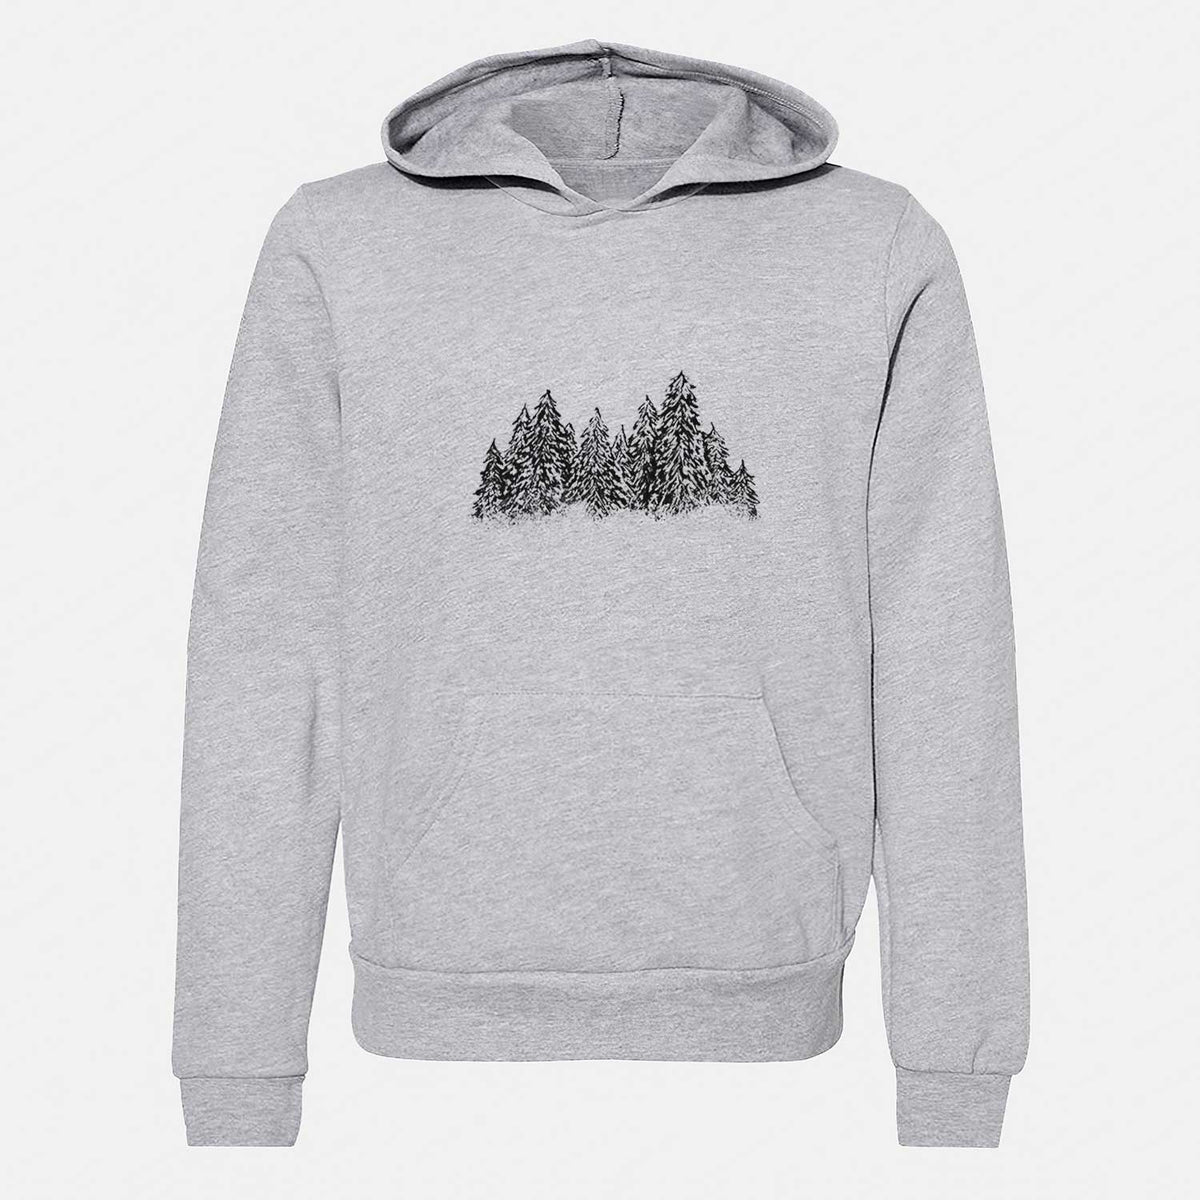 Winter Evergreens - Youth Hoodie Sweatshirt